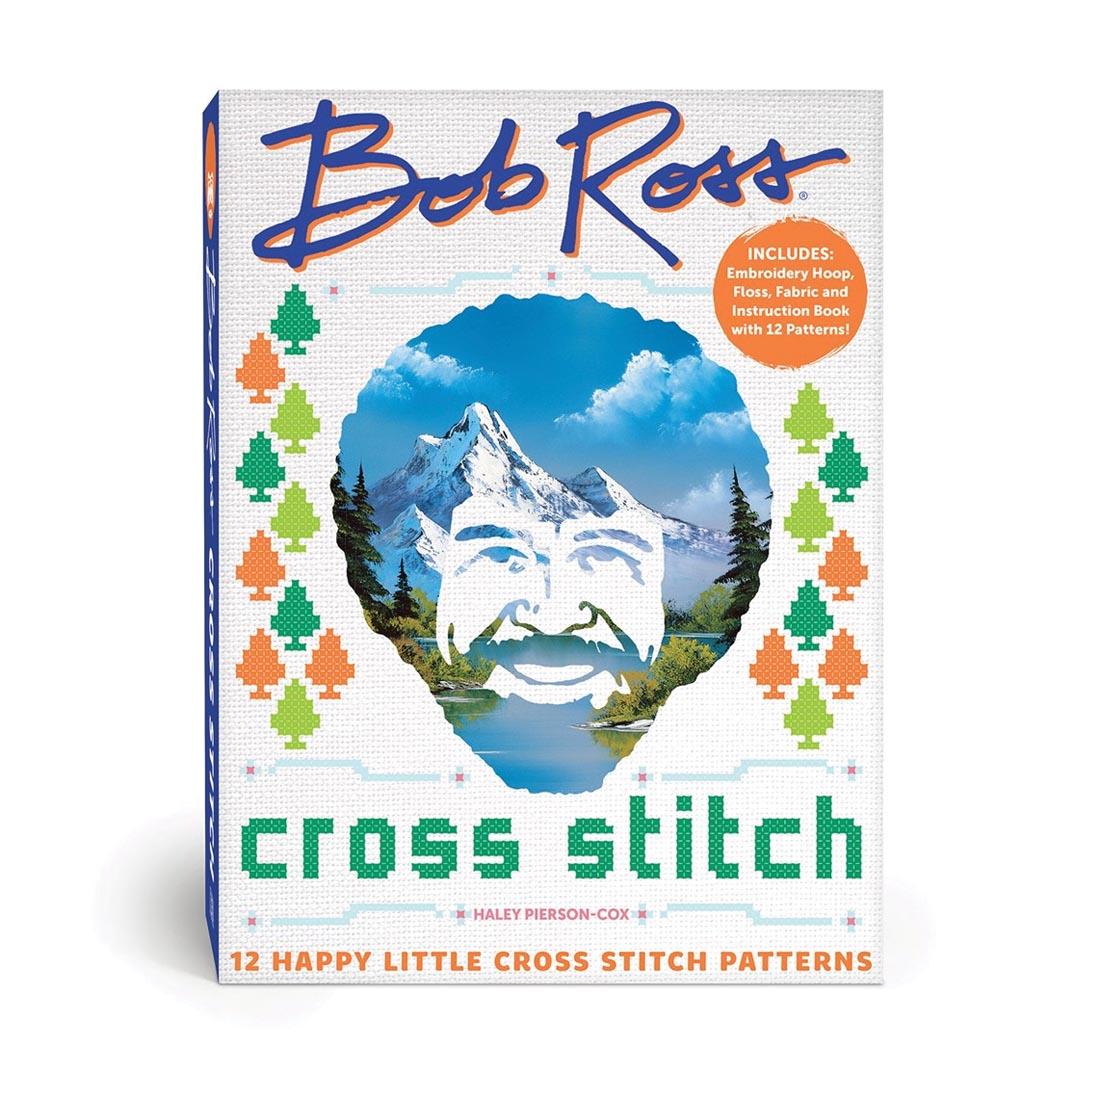 Bob Ross Cross Stitch Kit package